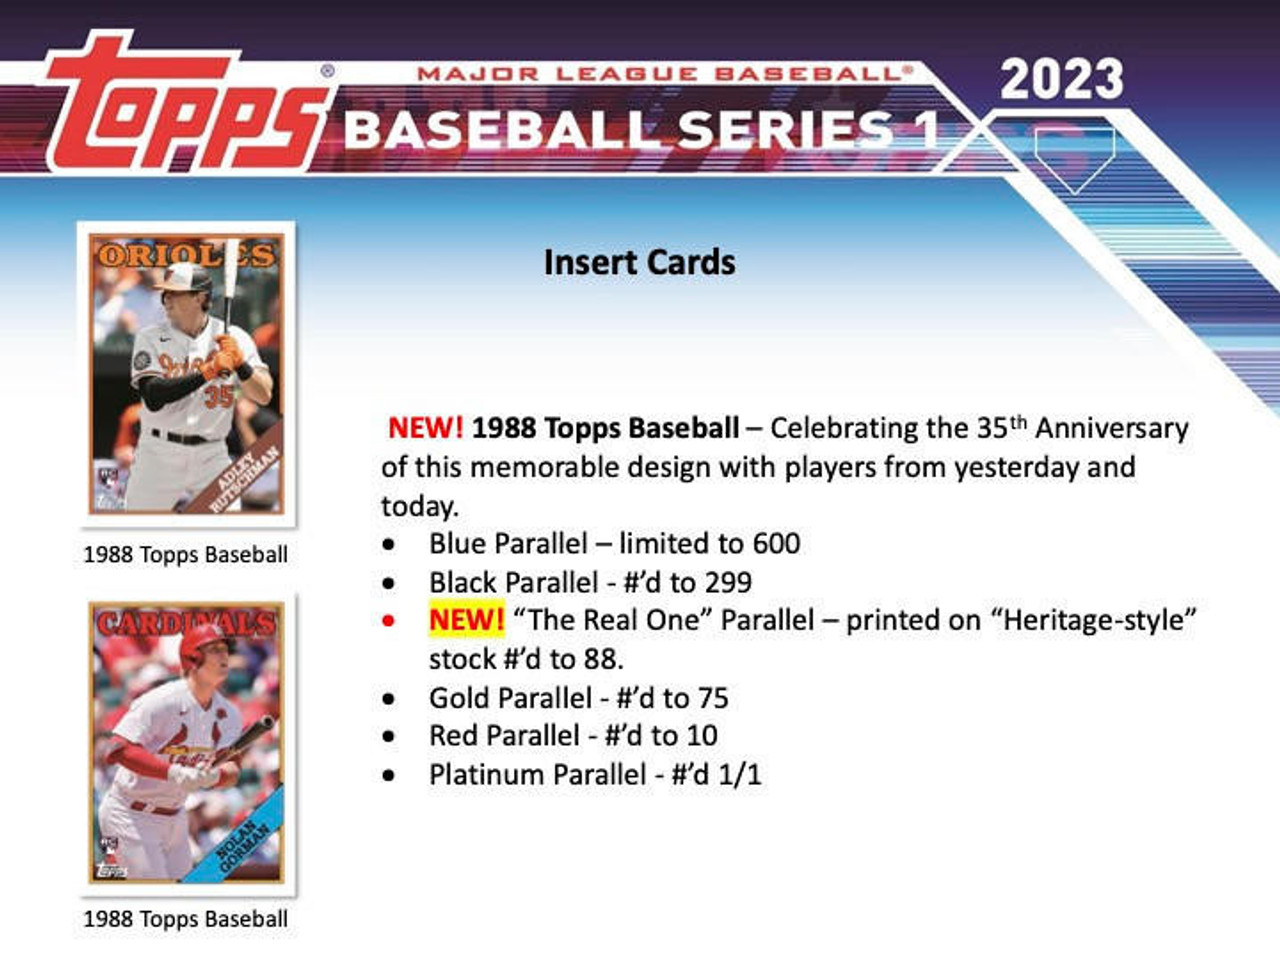 2023 Topps Series 1 #125 Marcell Ozuna - Atlanta Braves BASE BASEBALL CARD